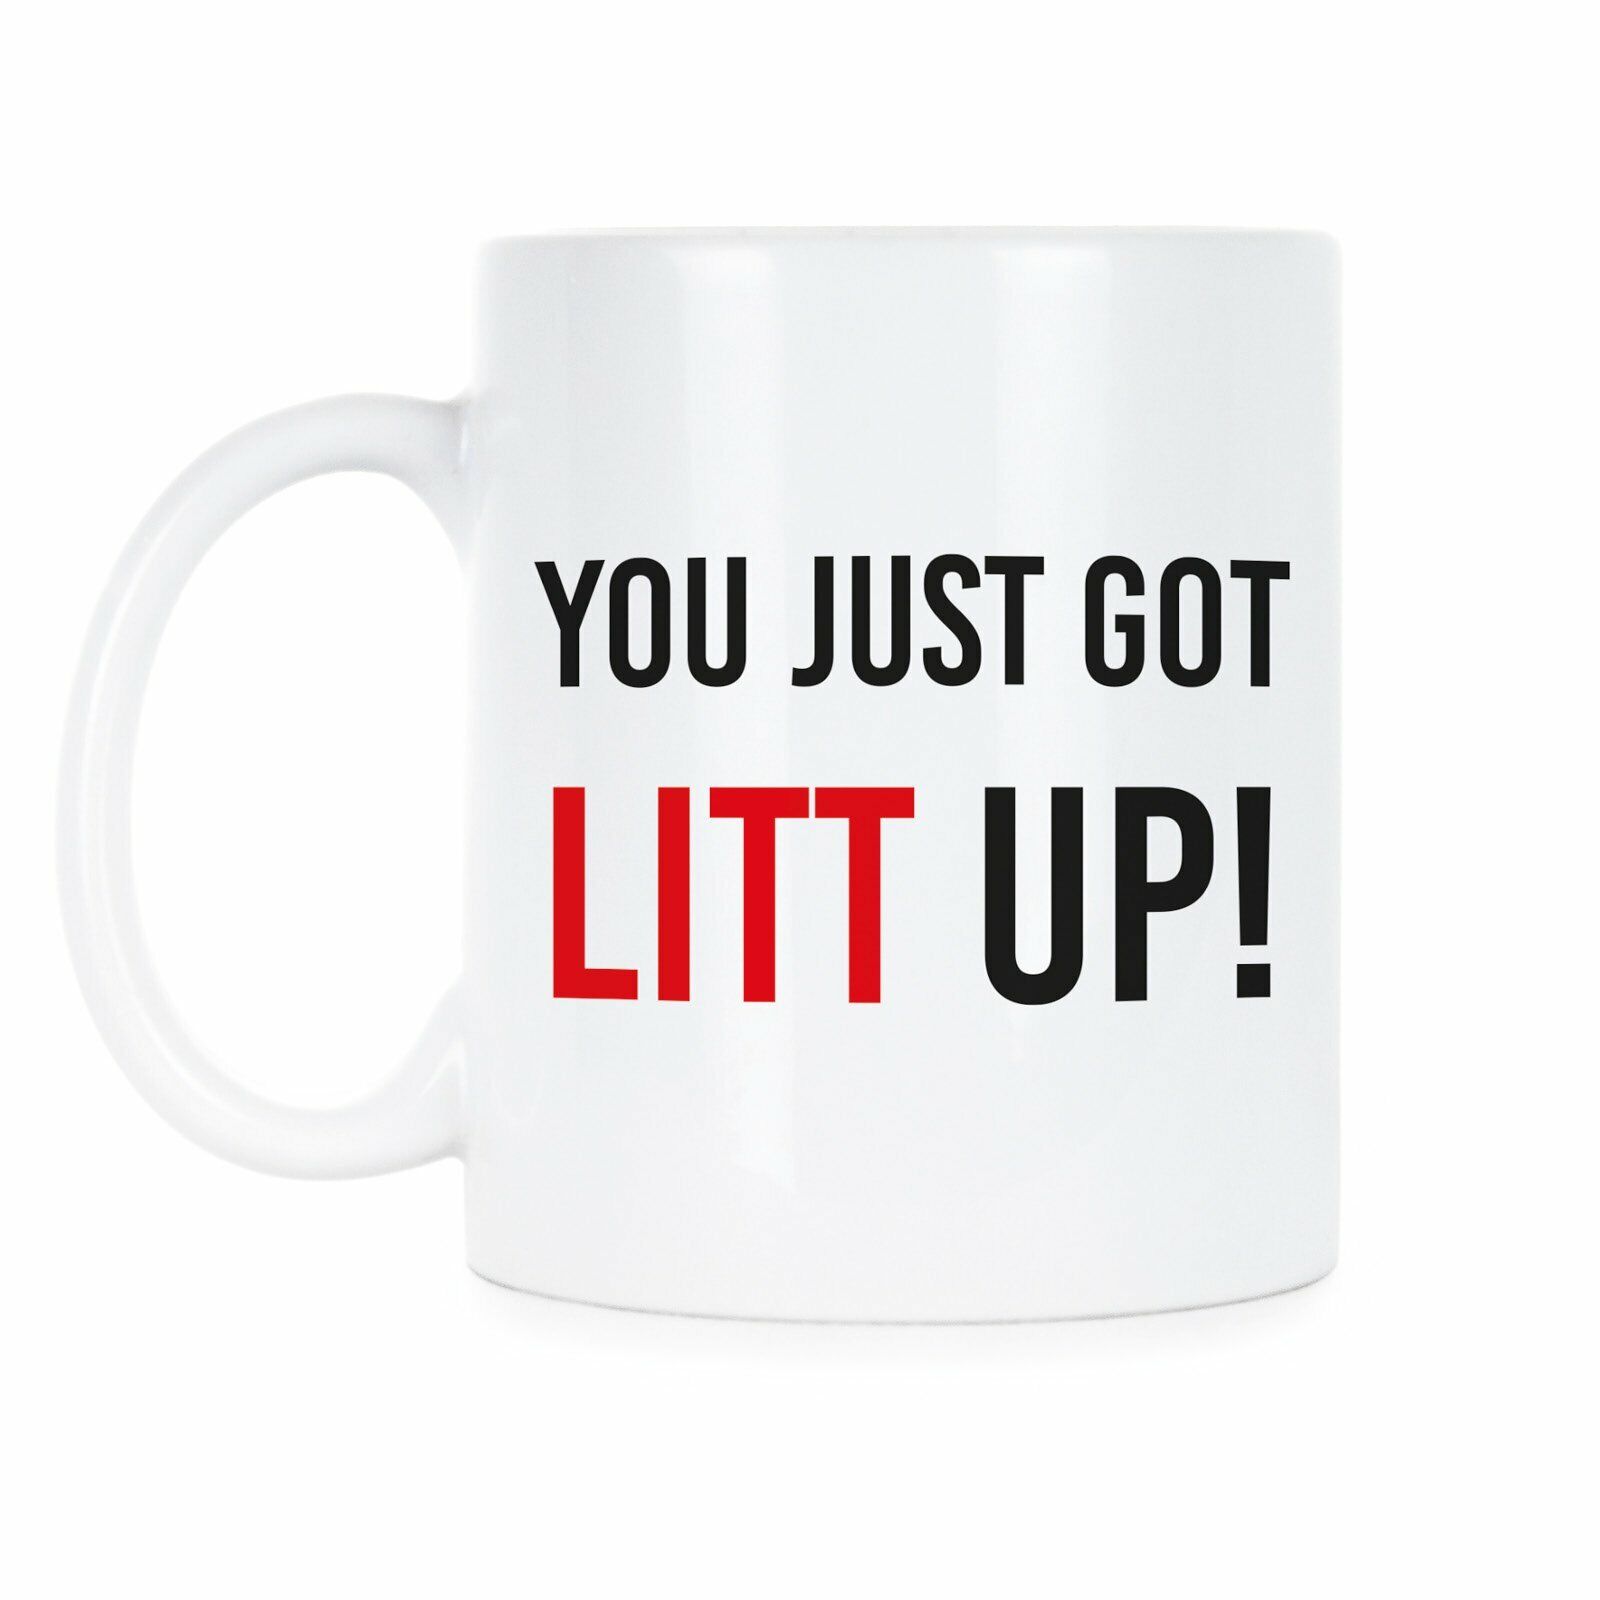 You Just Got Litt Up by Louis Litt on Suits Stainless Steel Travel Mug by BeeGeeTees (14 oz)